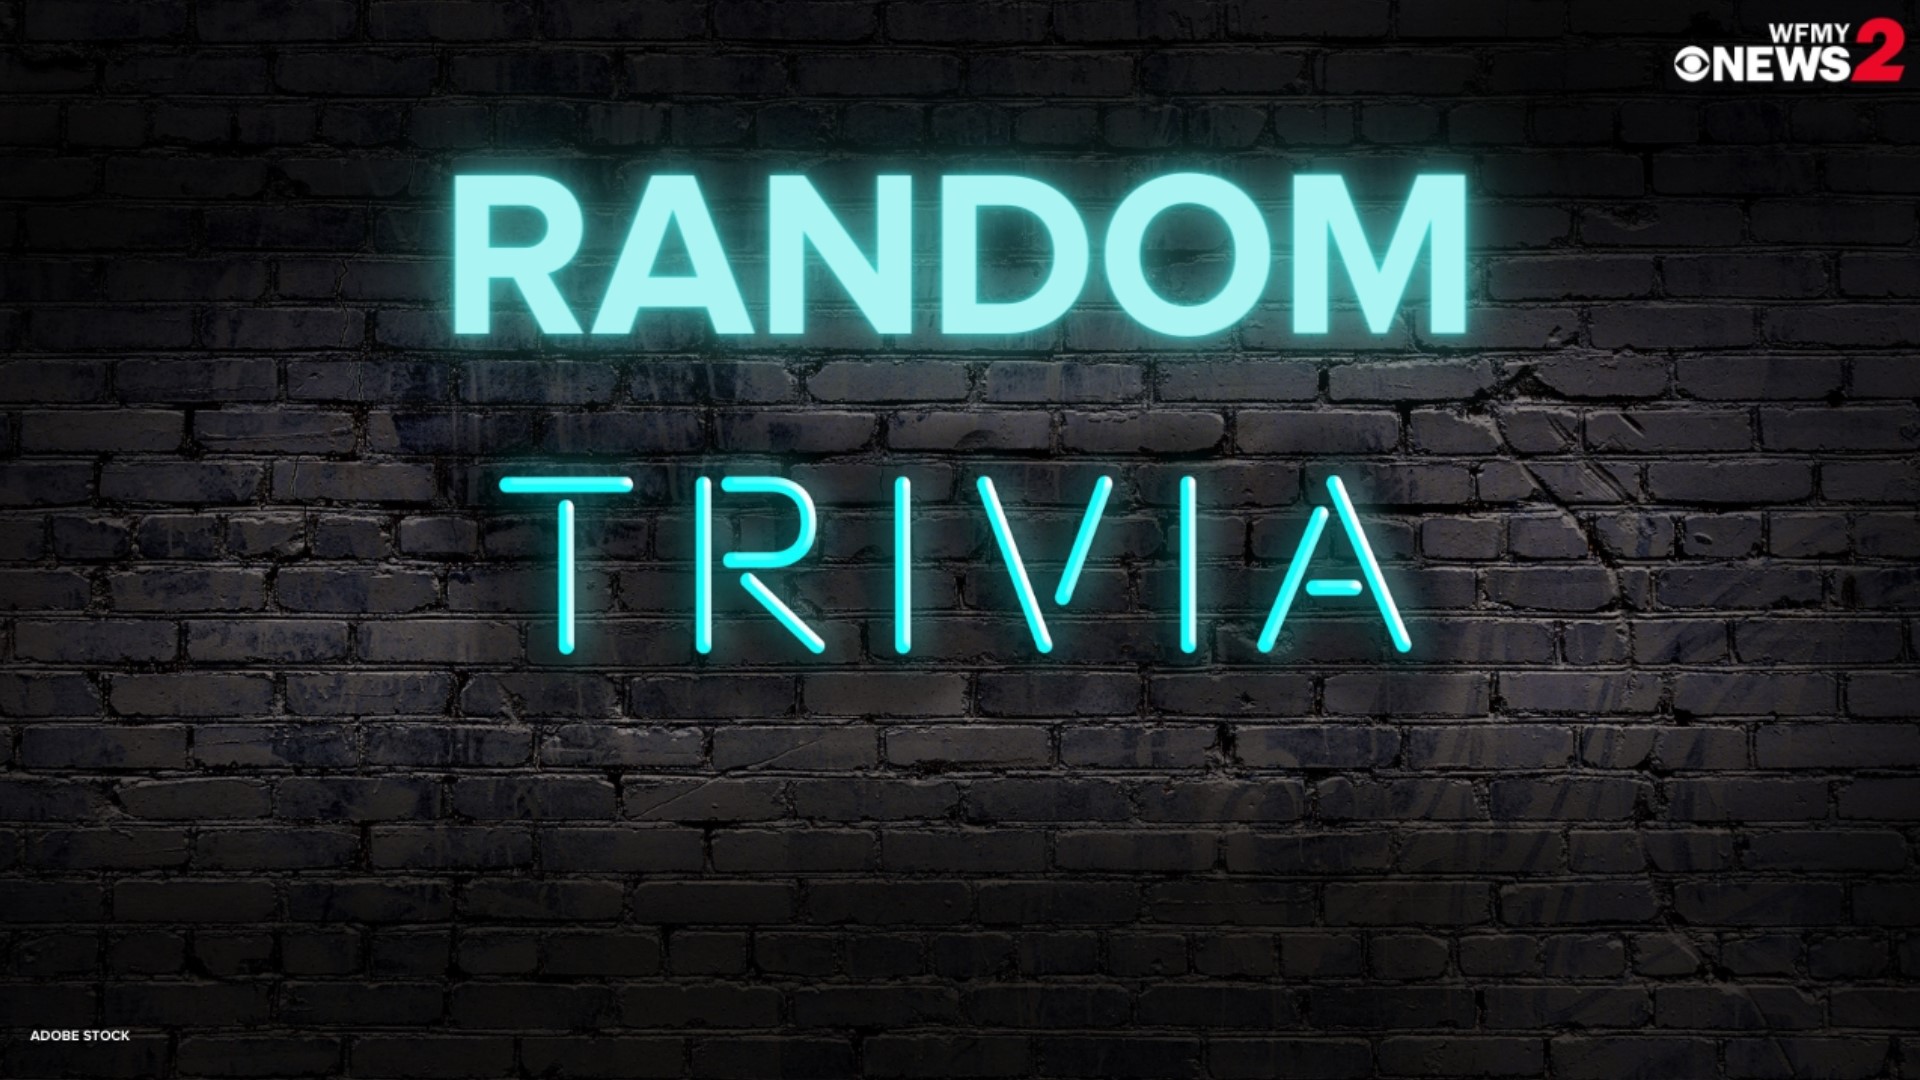 Eric Chilton quizzes us on super random useless trivia.